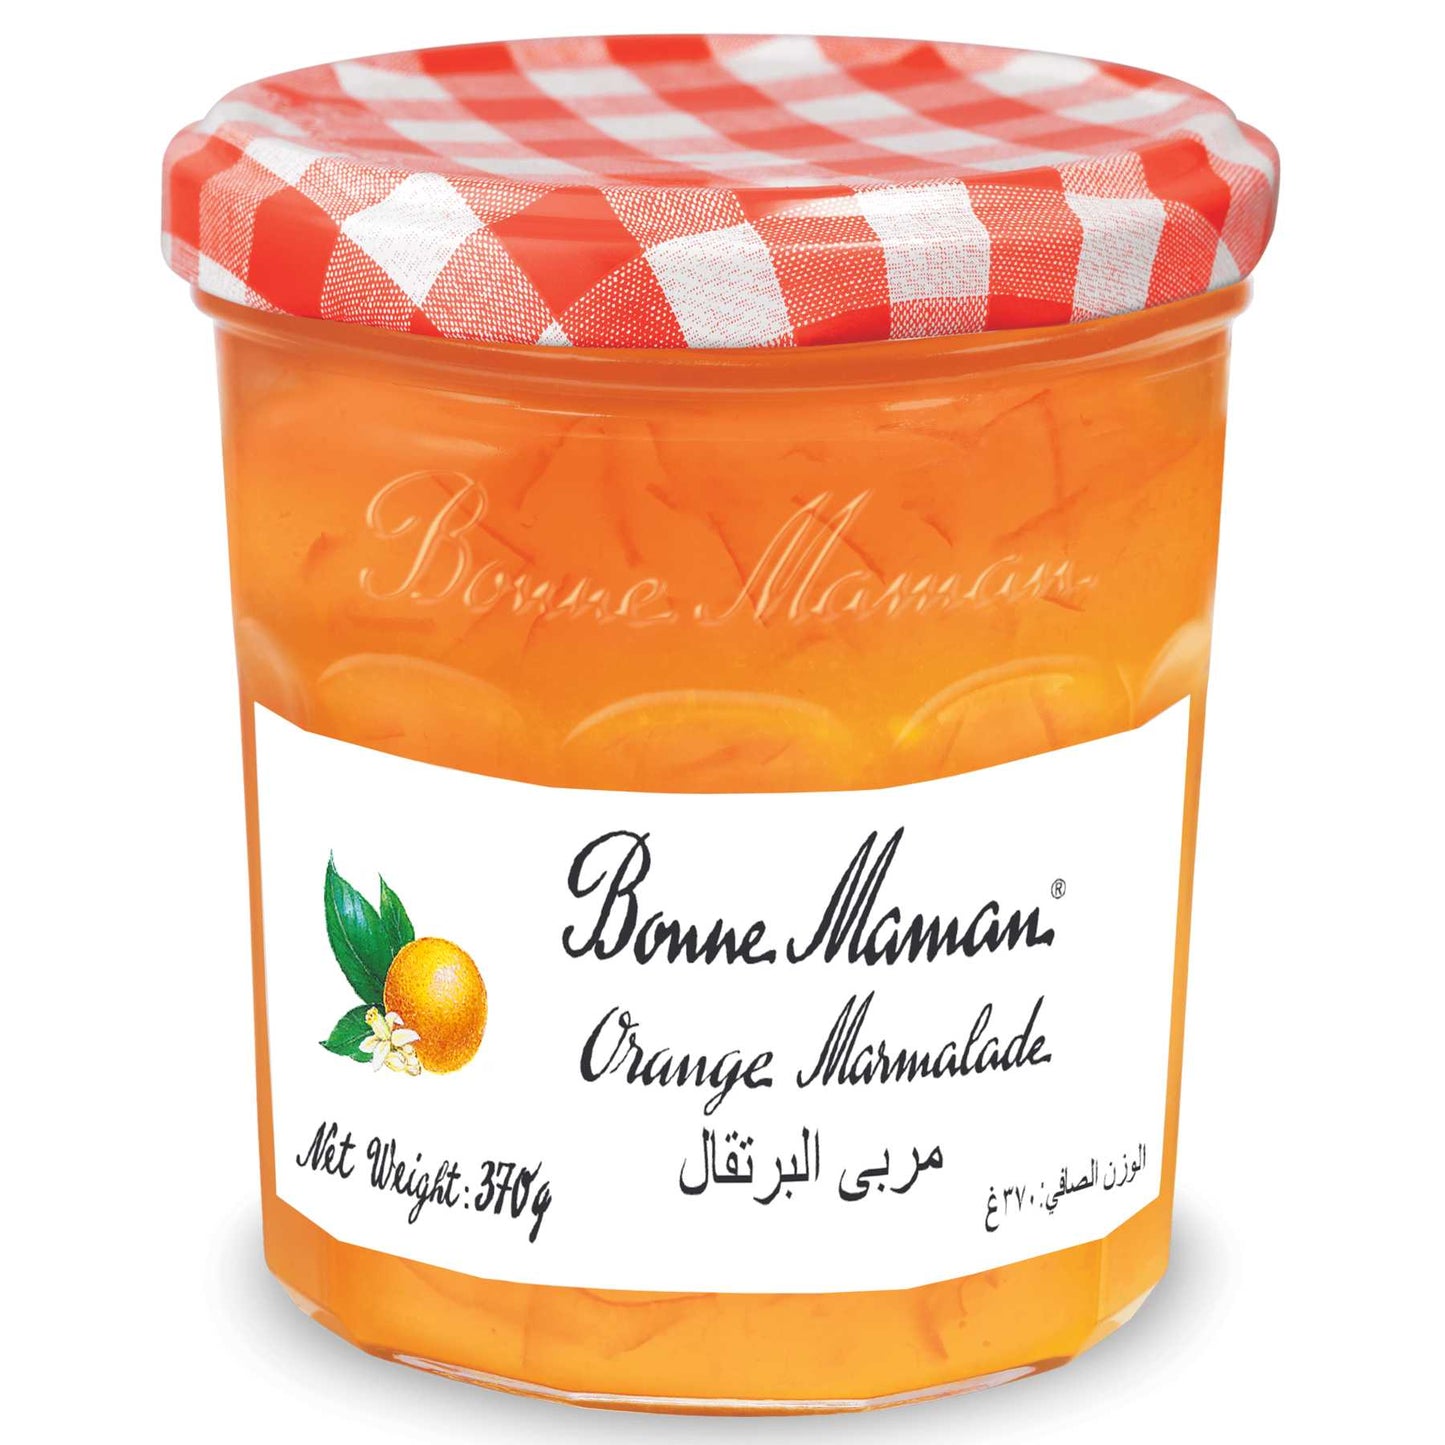 Bonne Maman Orange Marmalade (370g) Bonne Maman